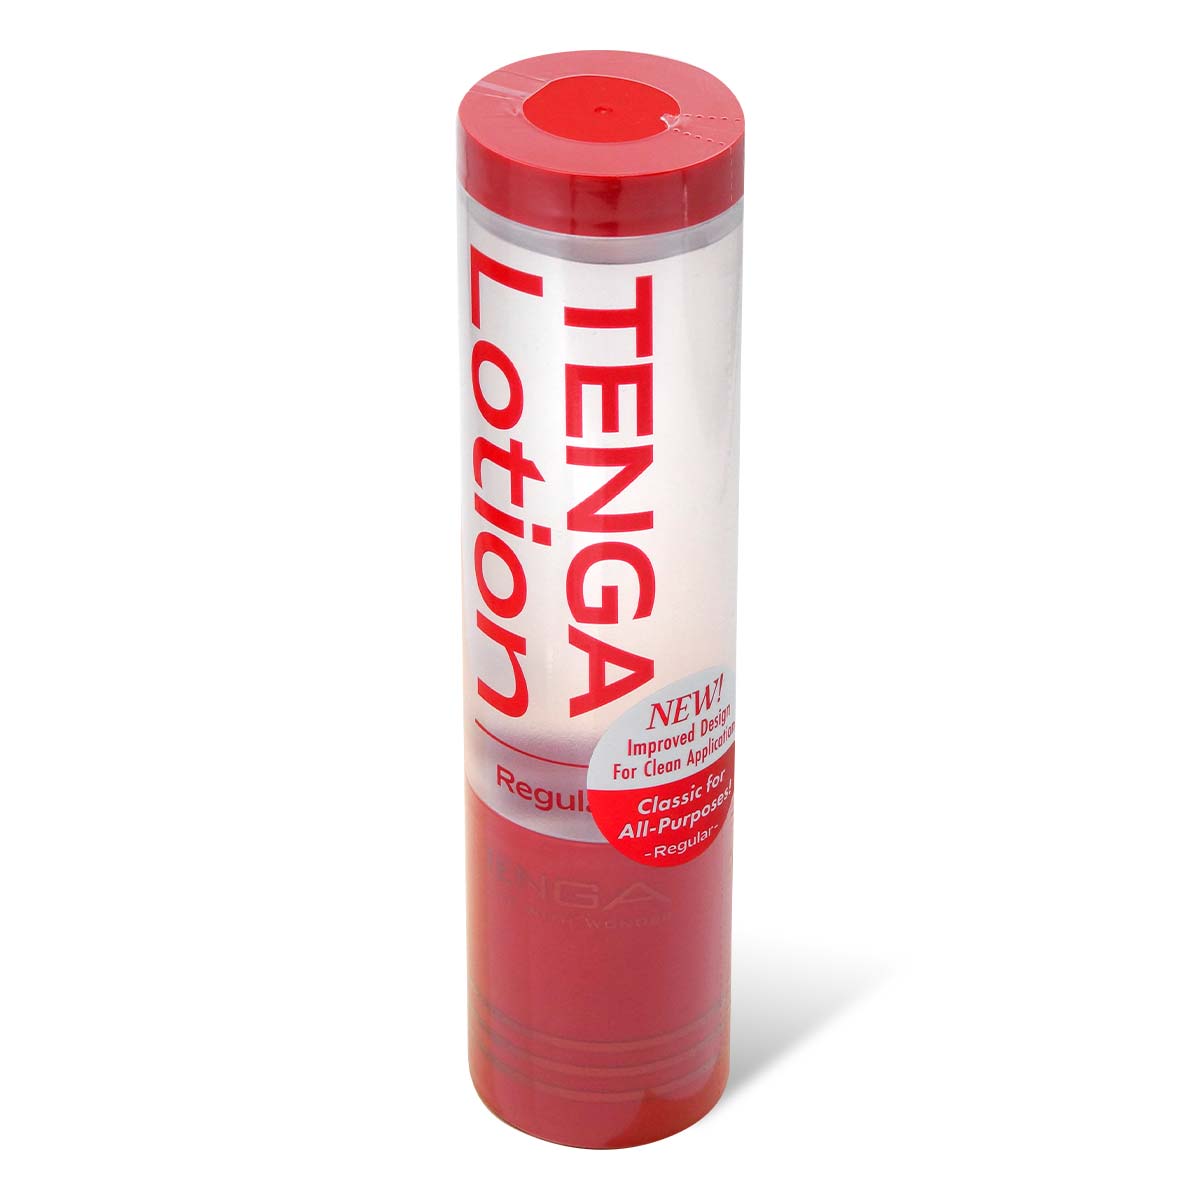 TENGA LOTION REGULAR 170ml 水性潤滑液-p_1